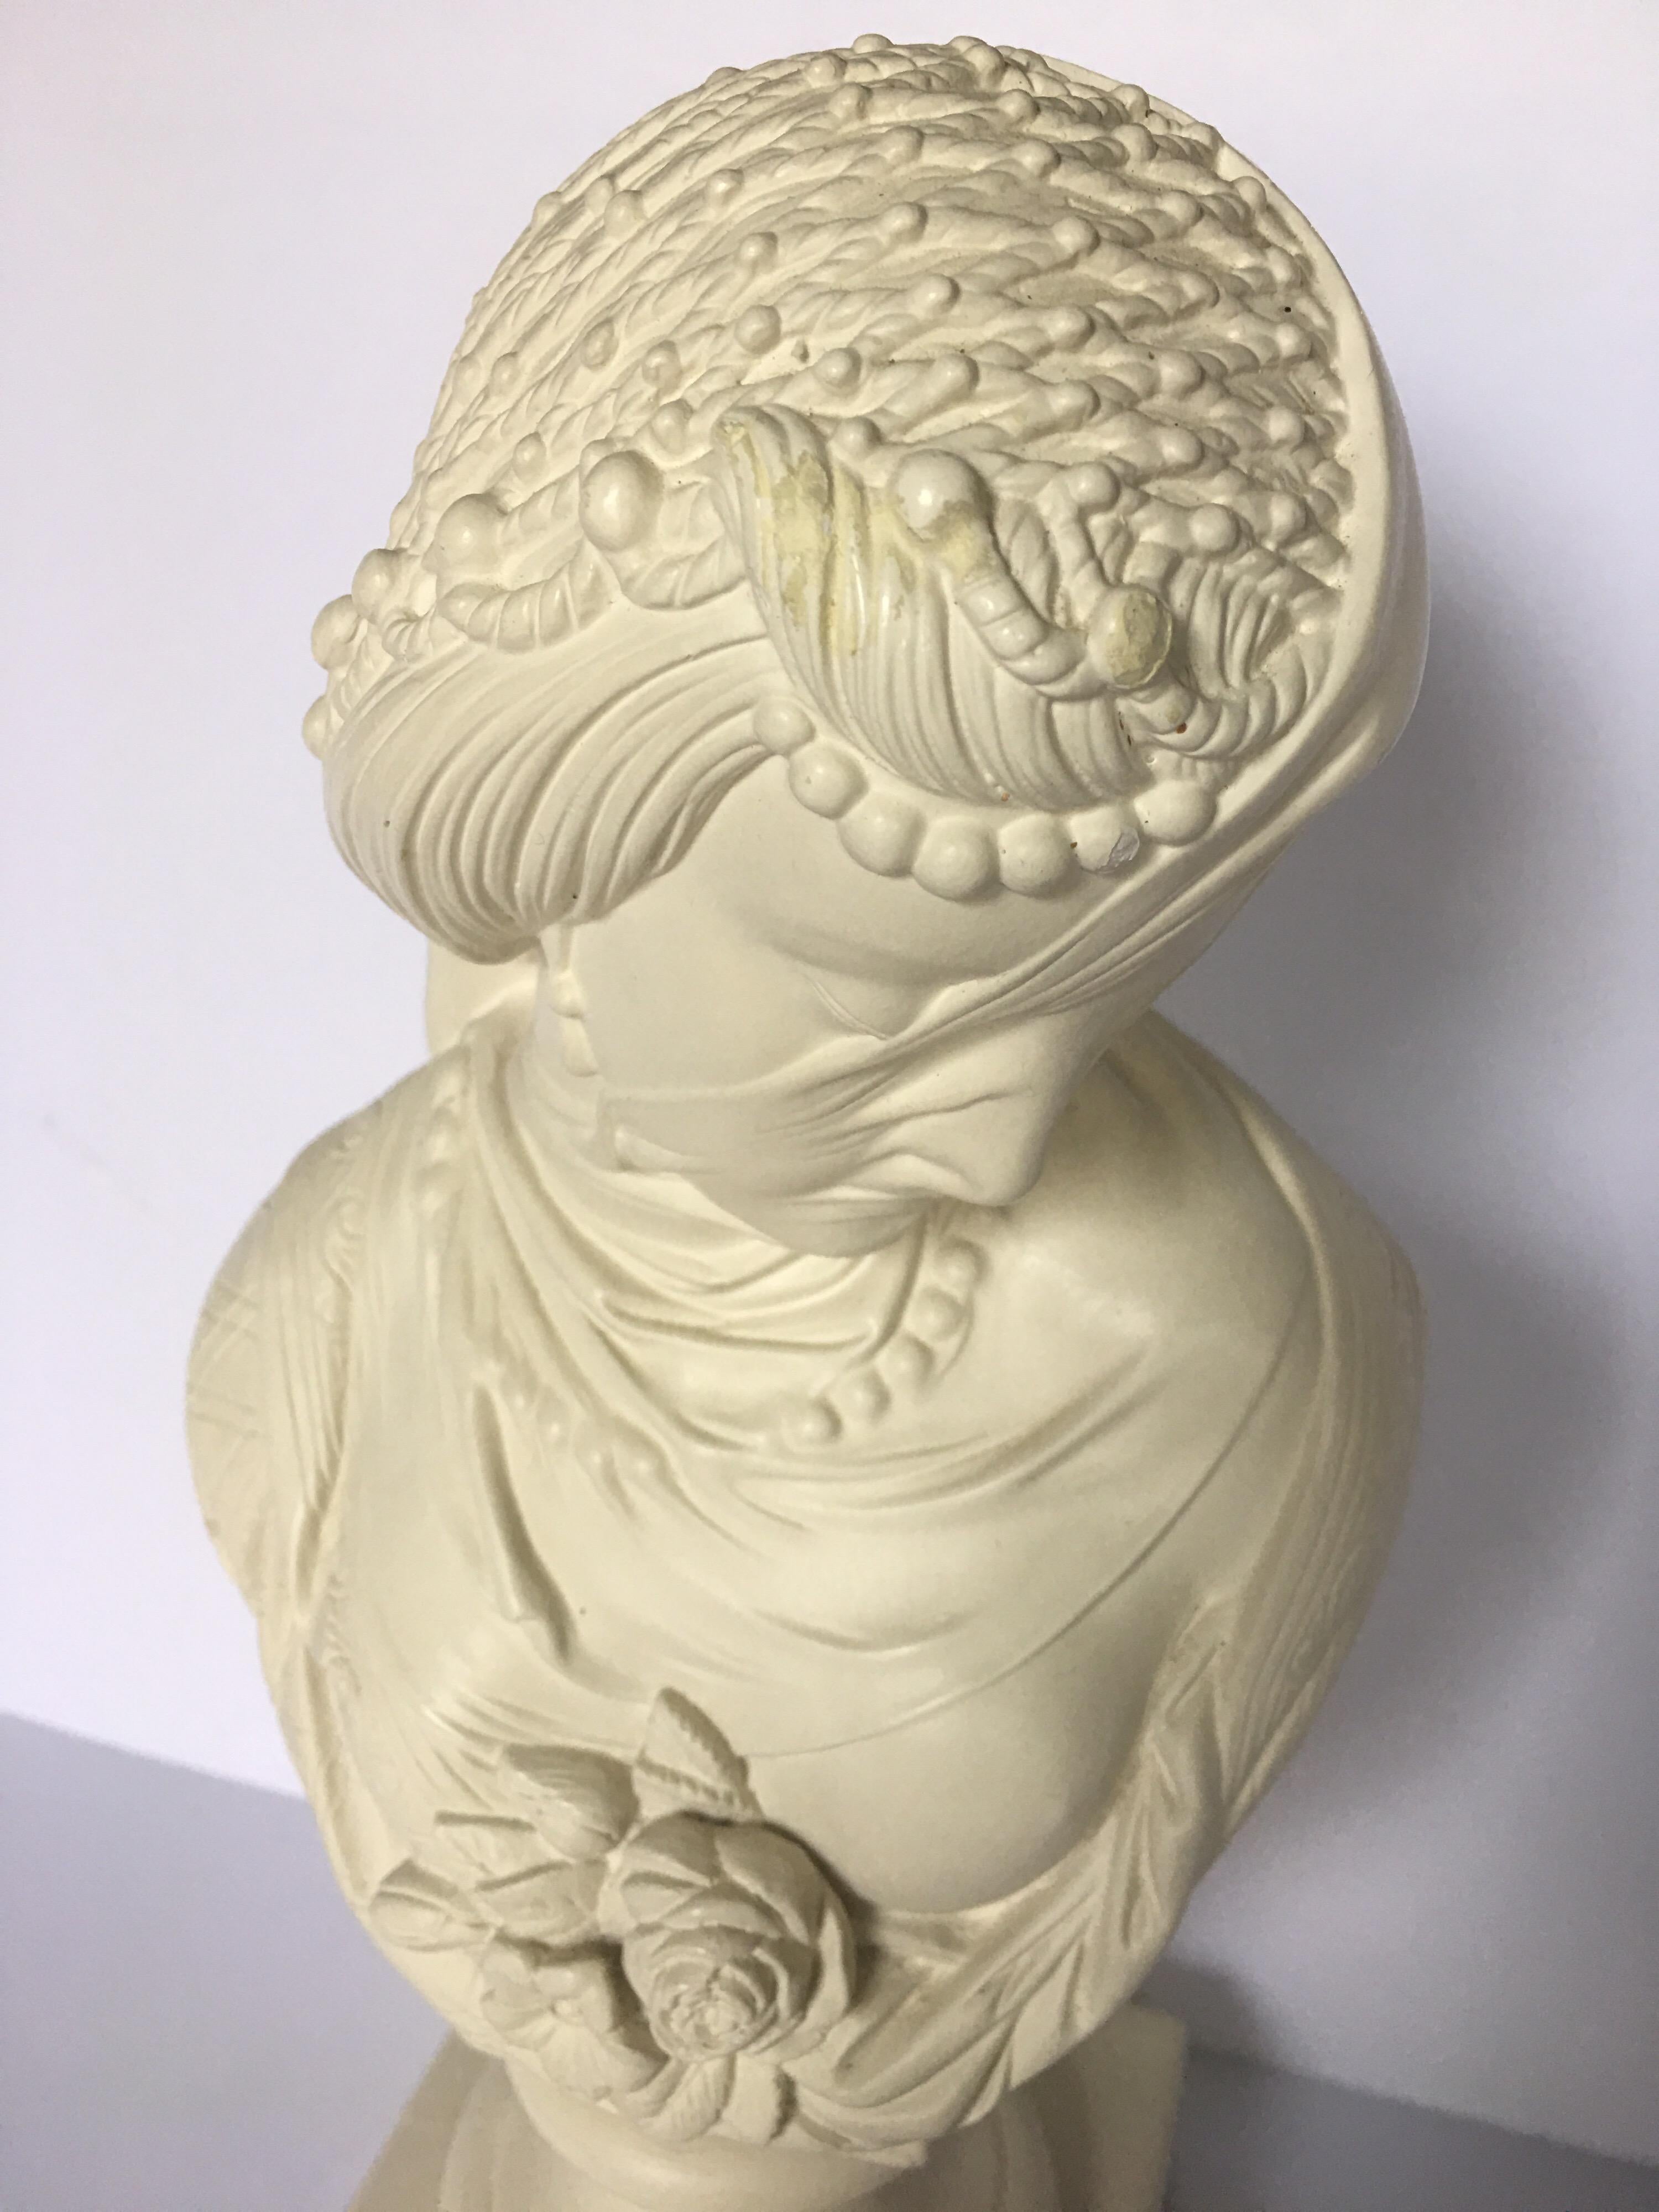 Midcentury museum quality reproduction plaster female veiled bust by Alva Studios, New York.